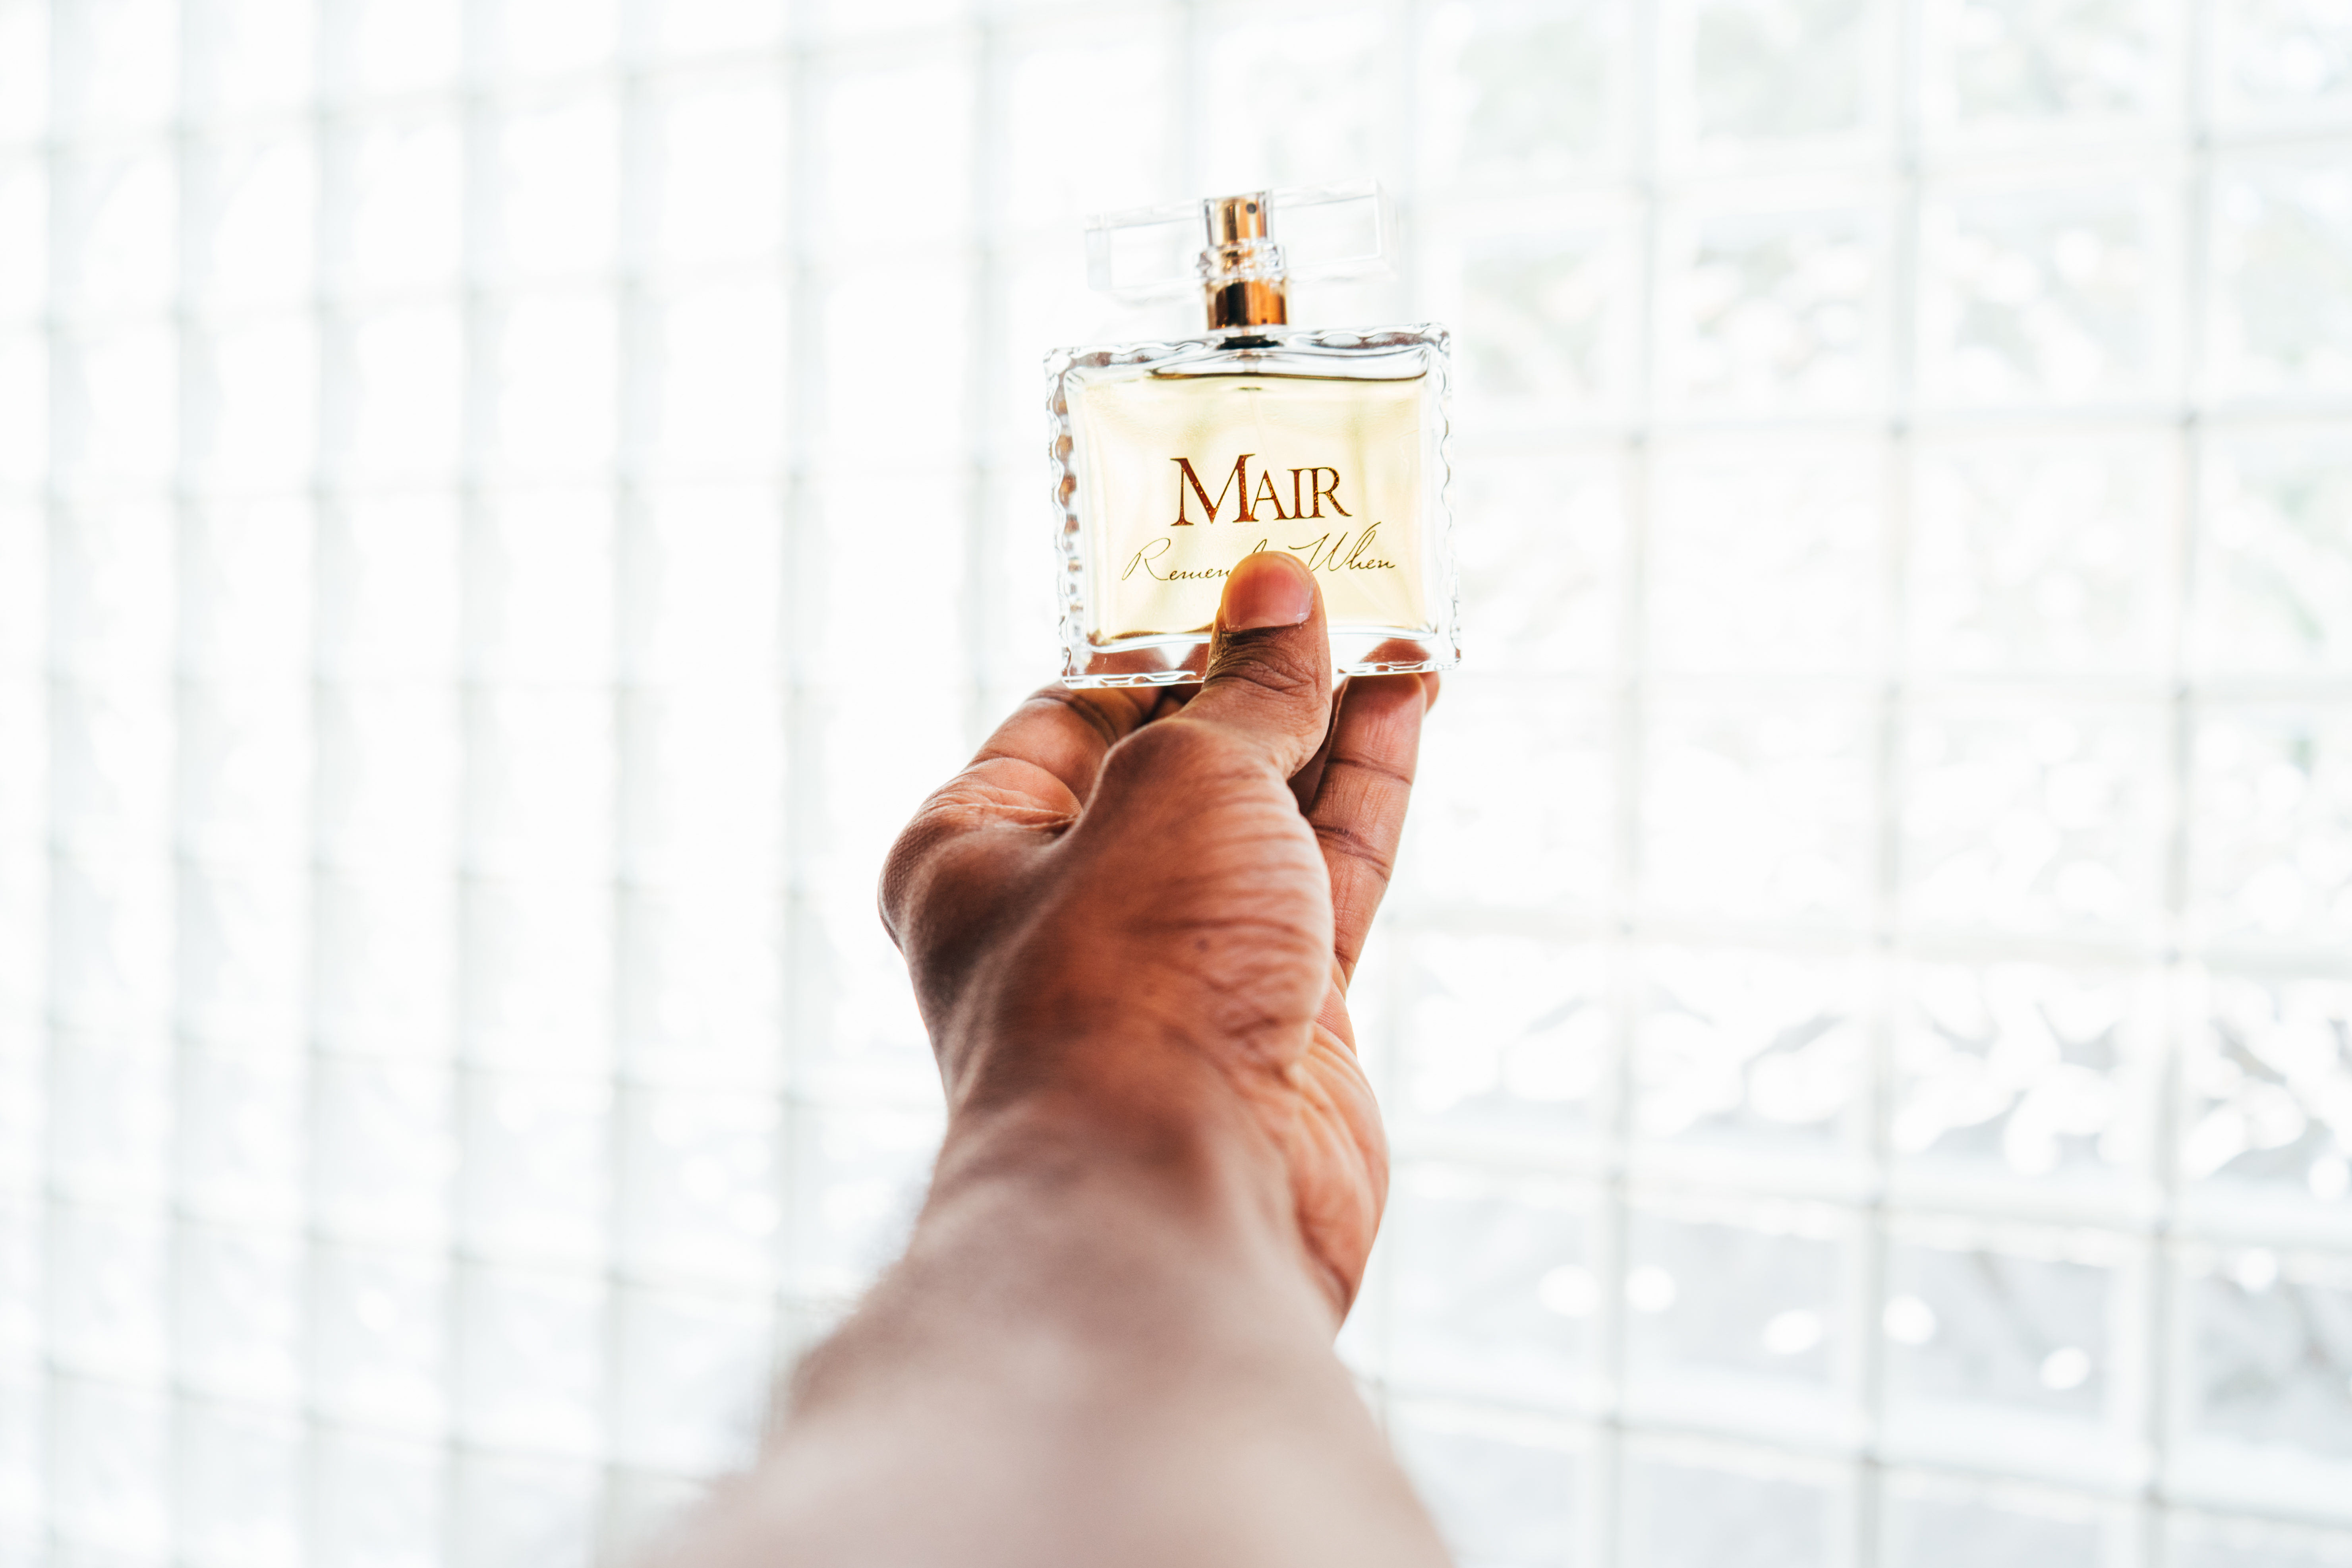 Do men like when women wear perfume? - MAIR